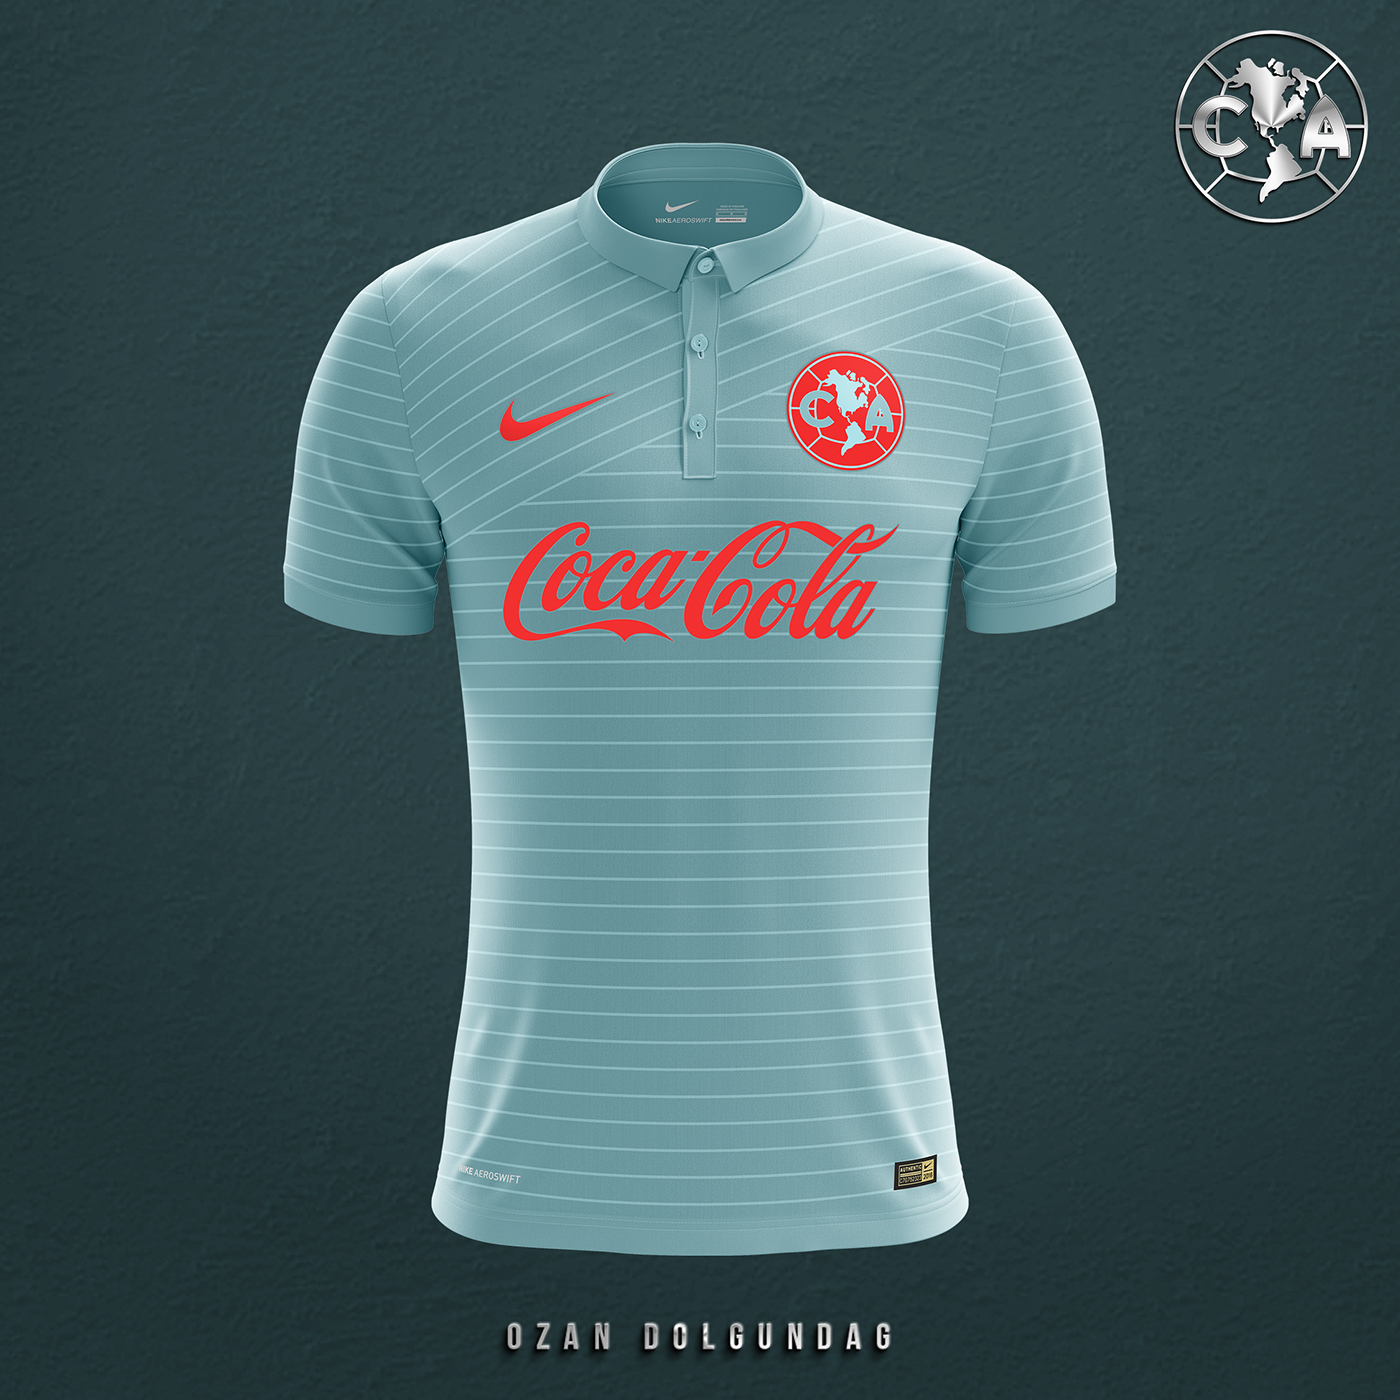 Nike Nike Elite nike jersey nike football jersey nike soccer jersey Jersey Design Kit Design camiseta football design jersey